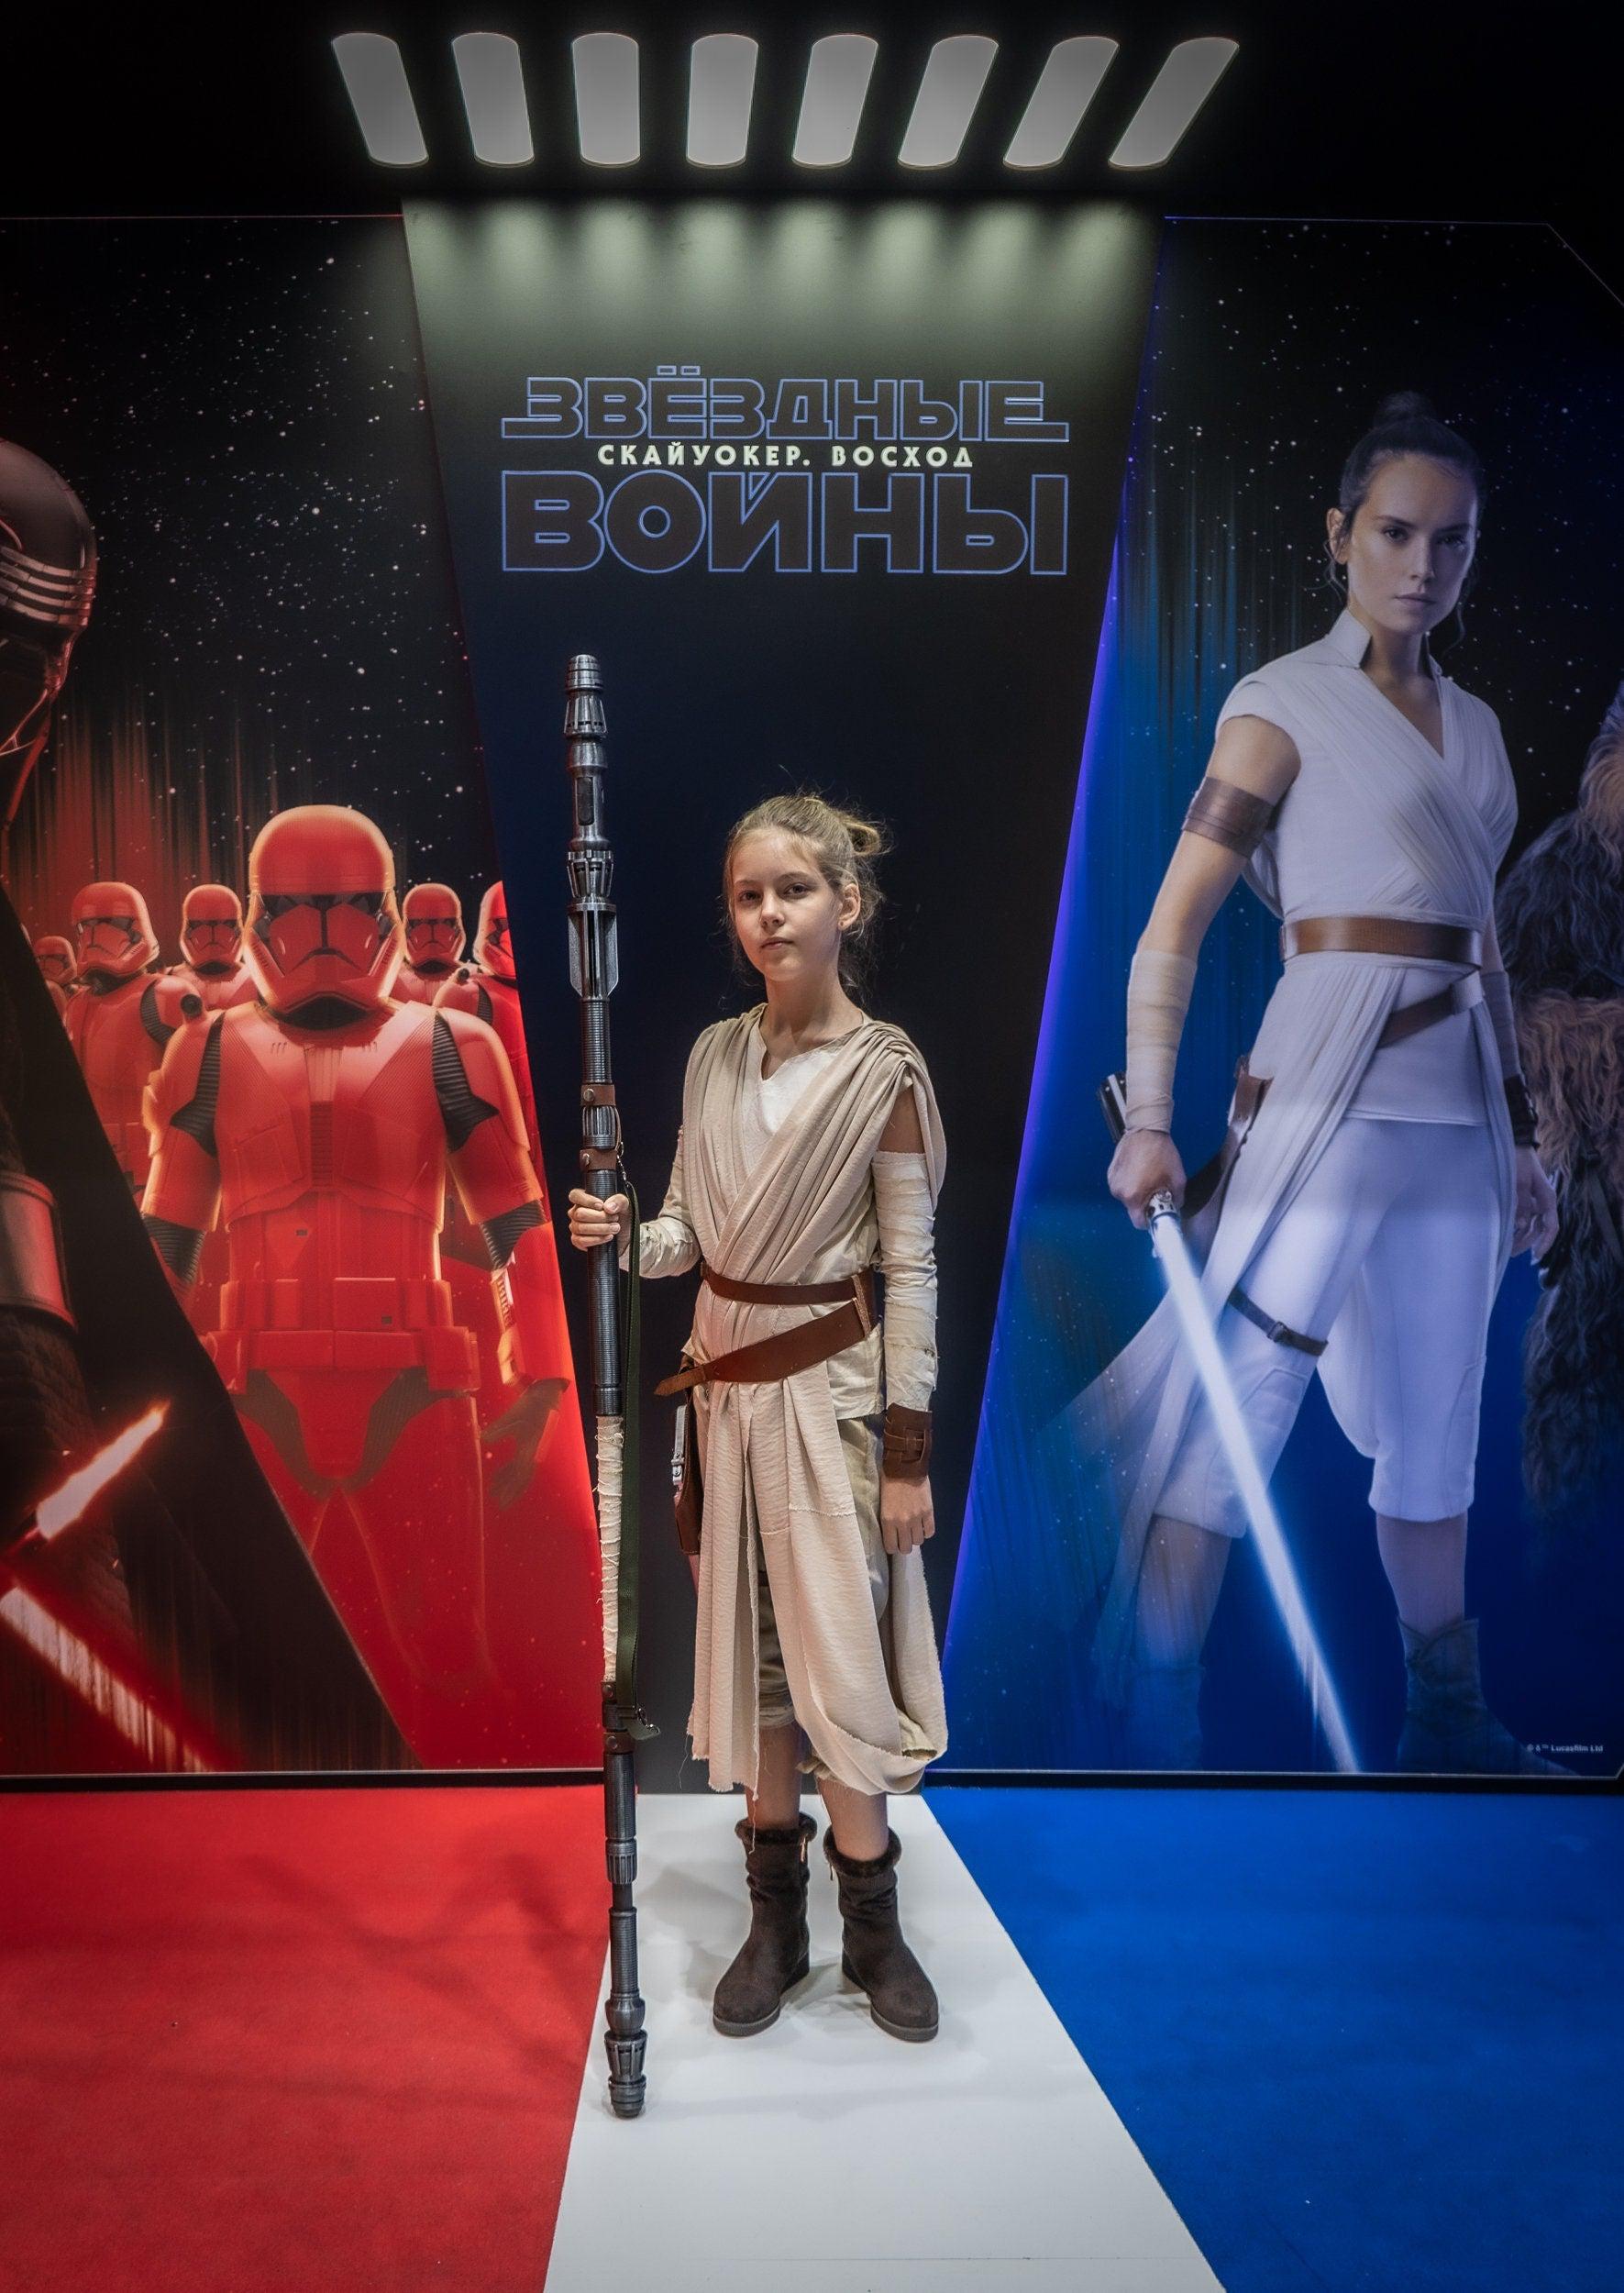 Rey Staff Star Wars | Star Wars: The Force Awakens Cosplay - 3DPrintProps